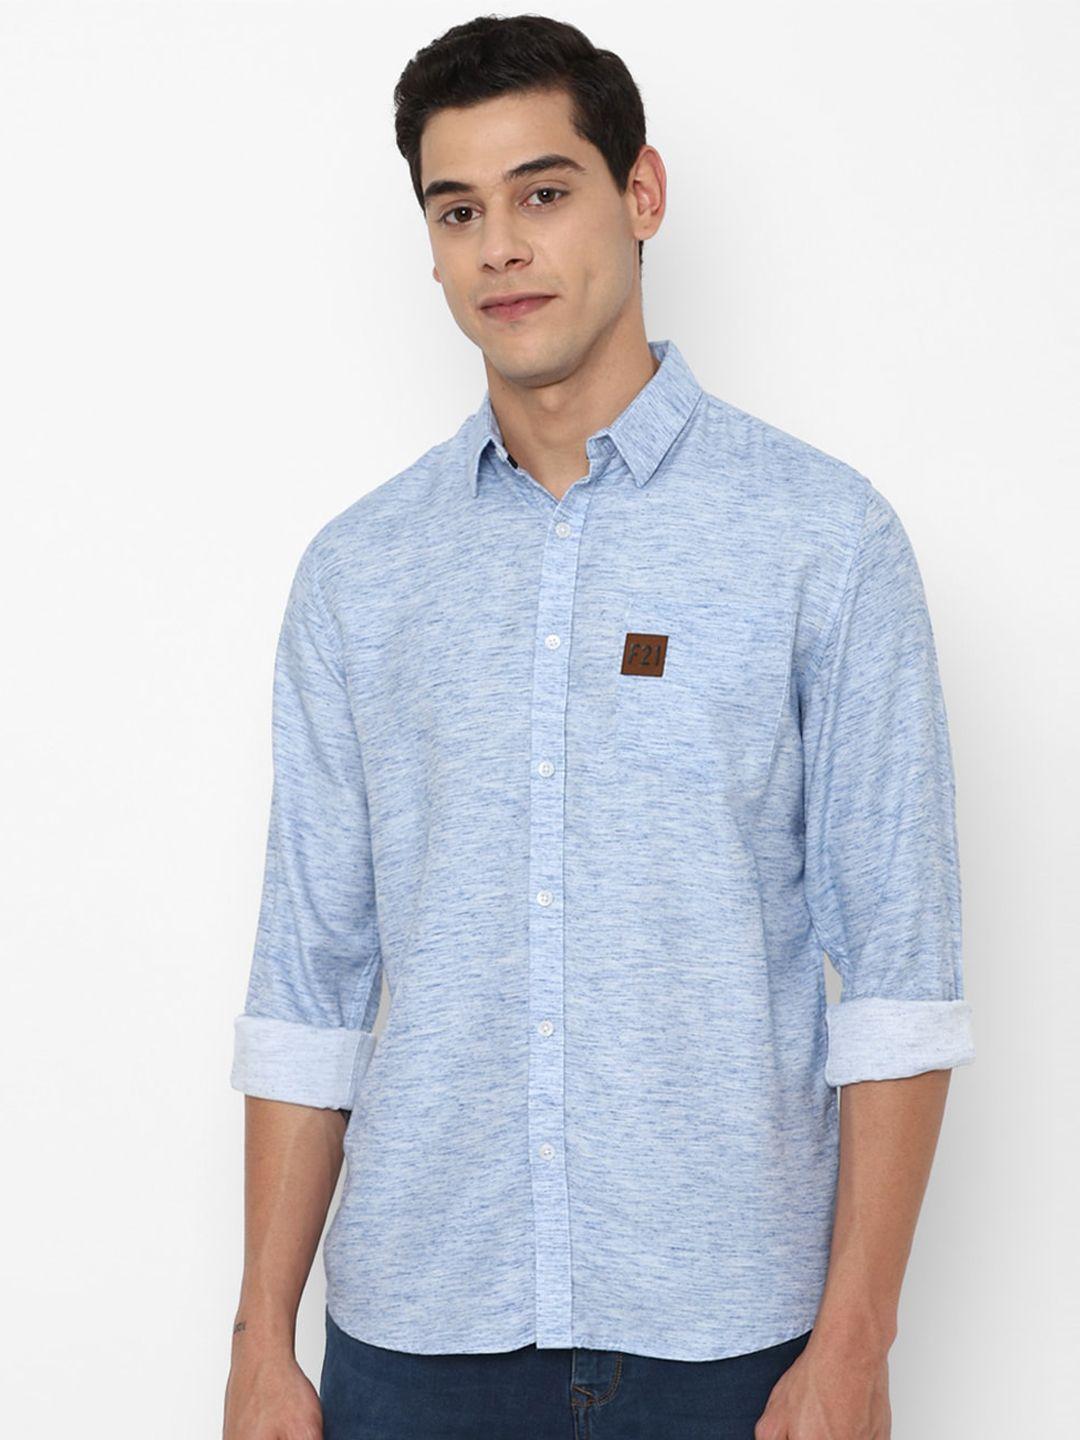 forever-21-men-blue-printed-casual-shirt